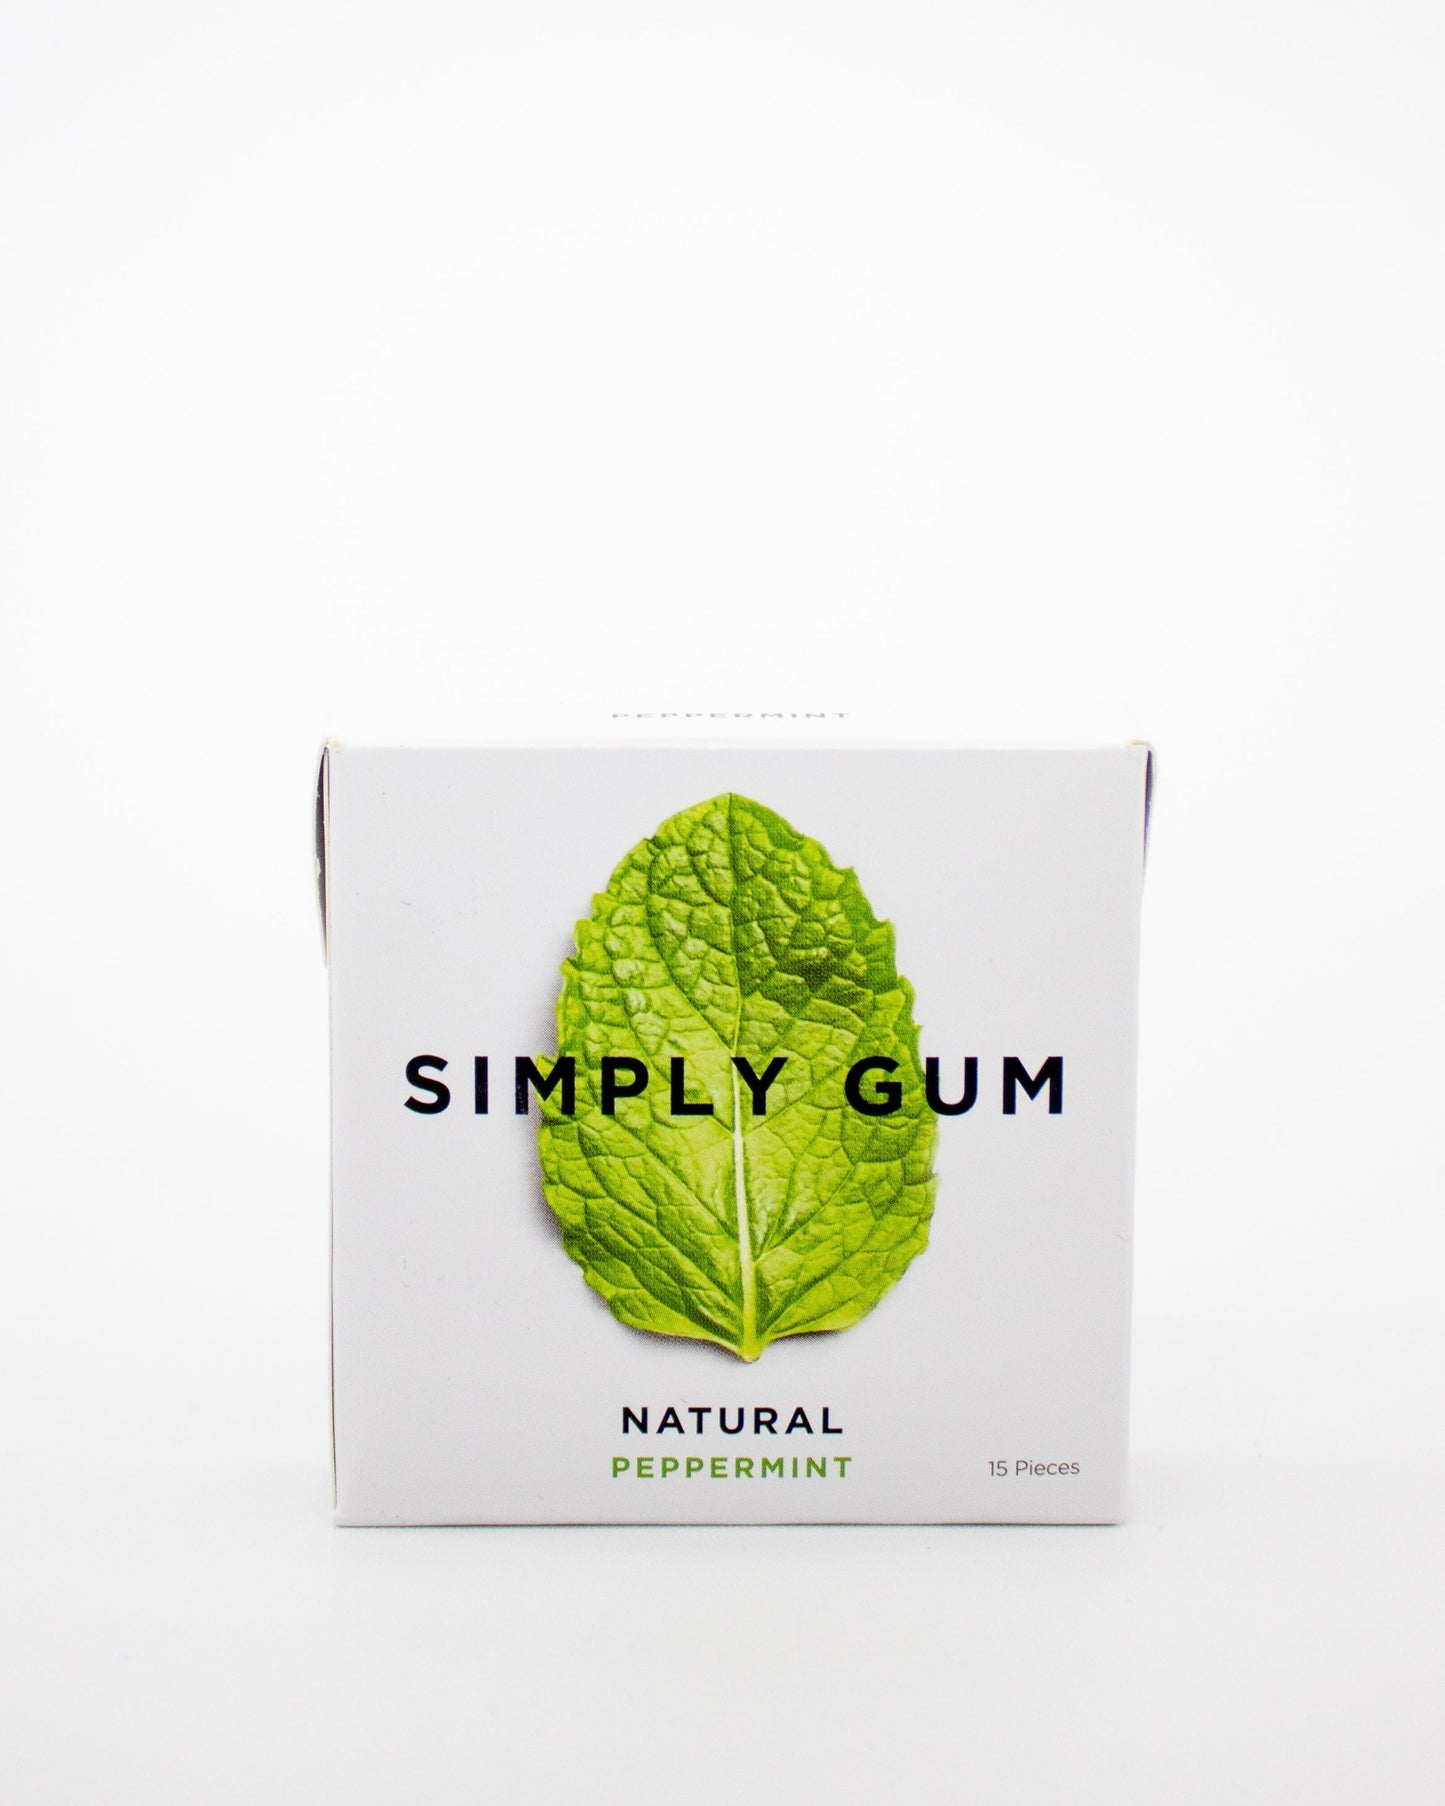 Simply Gum - Peppermint